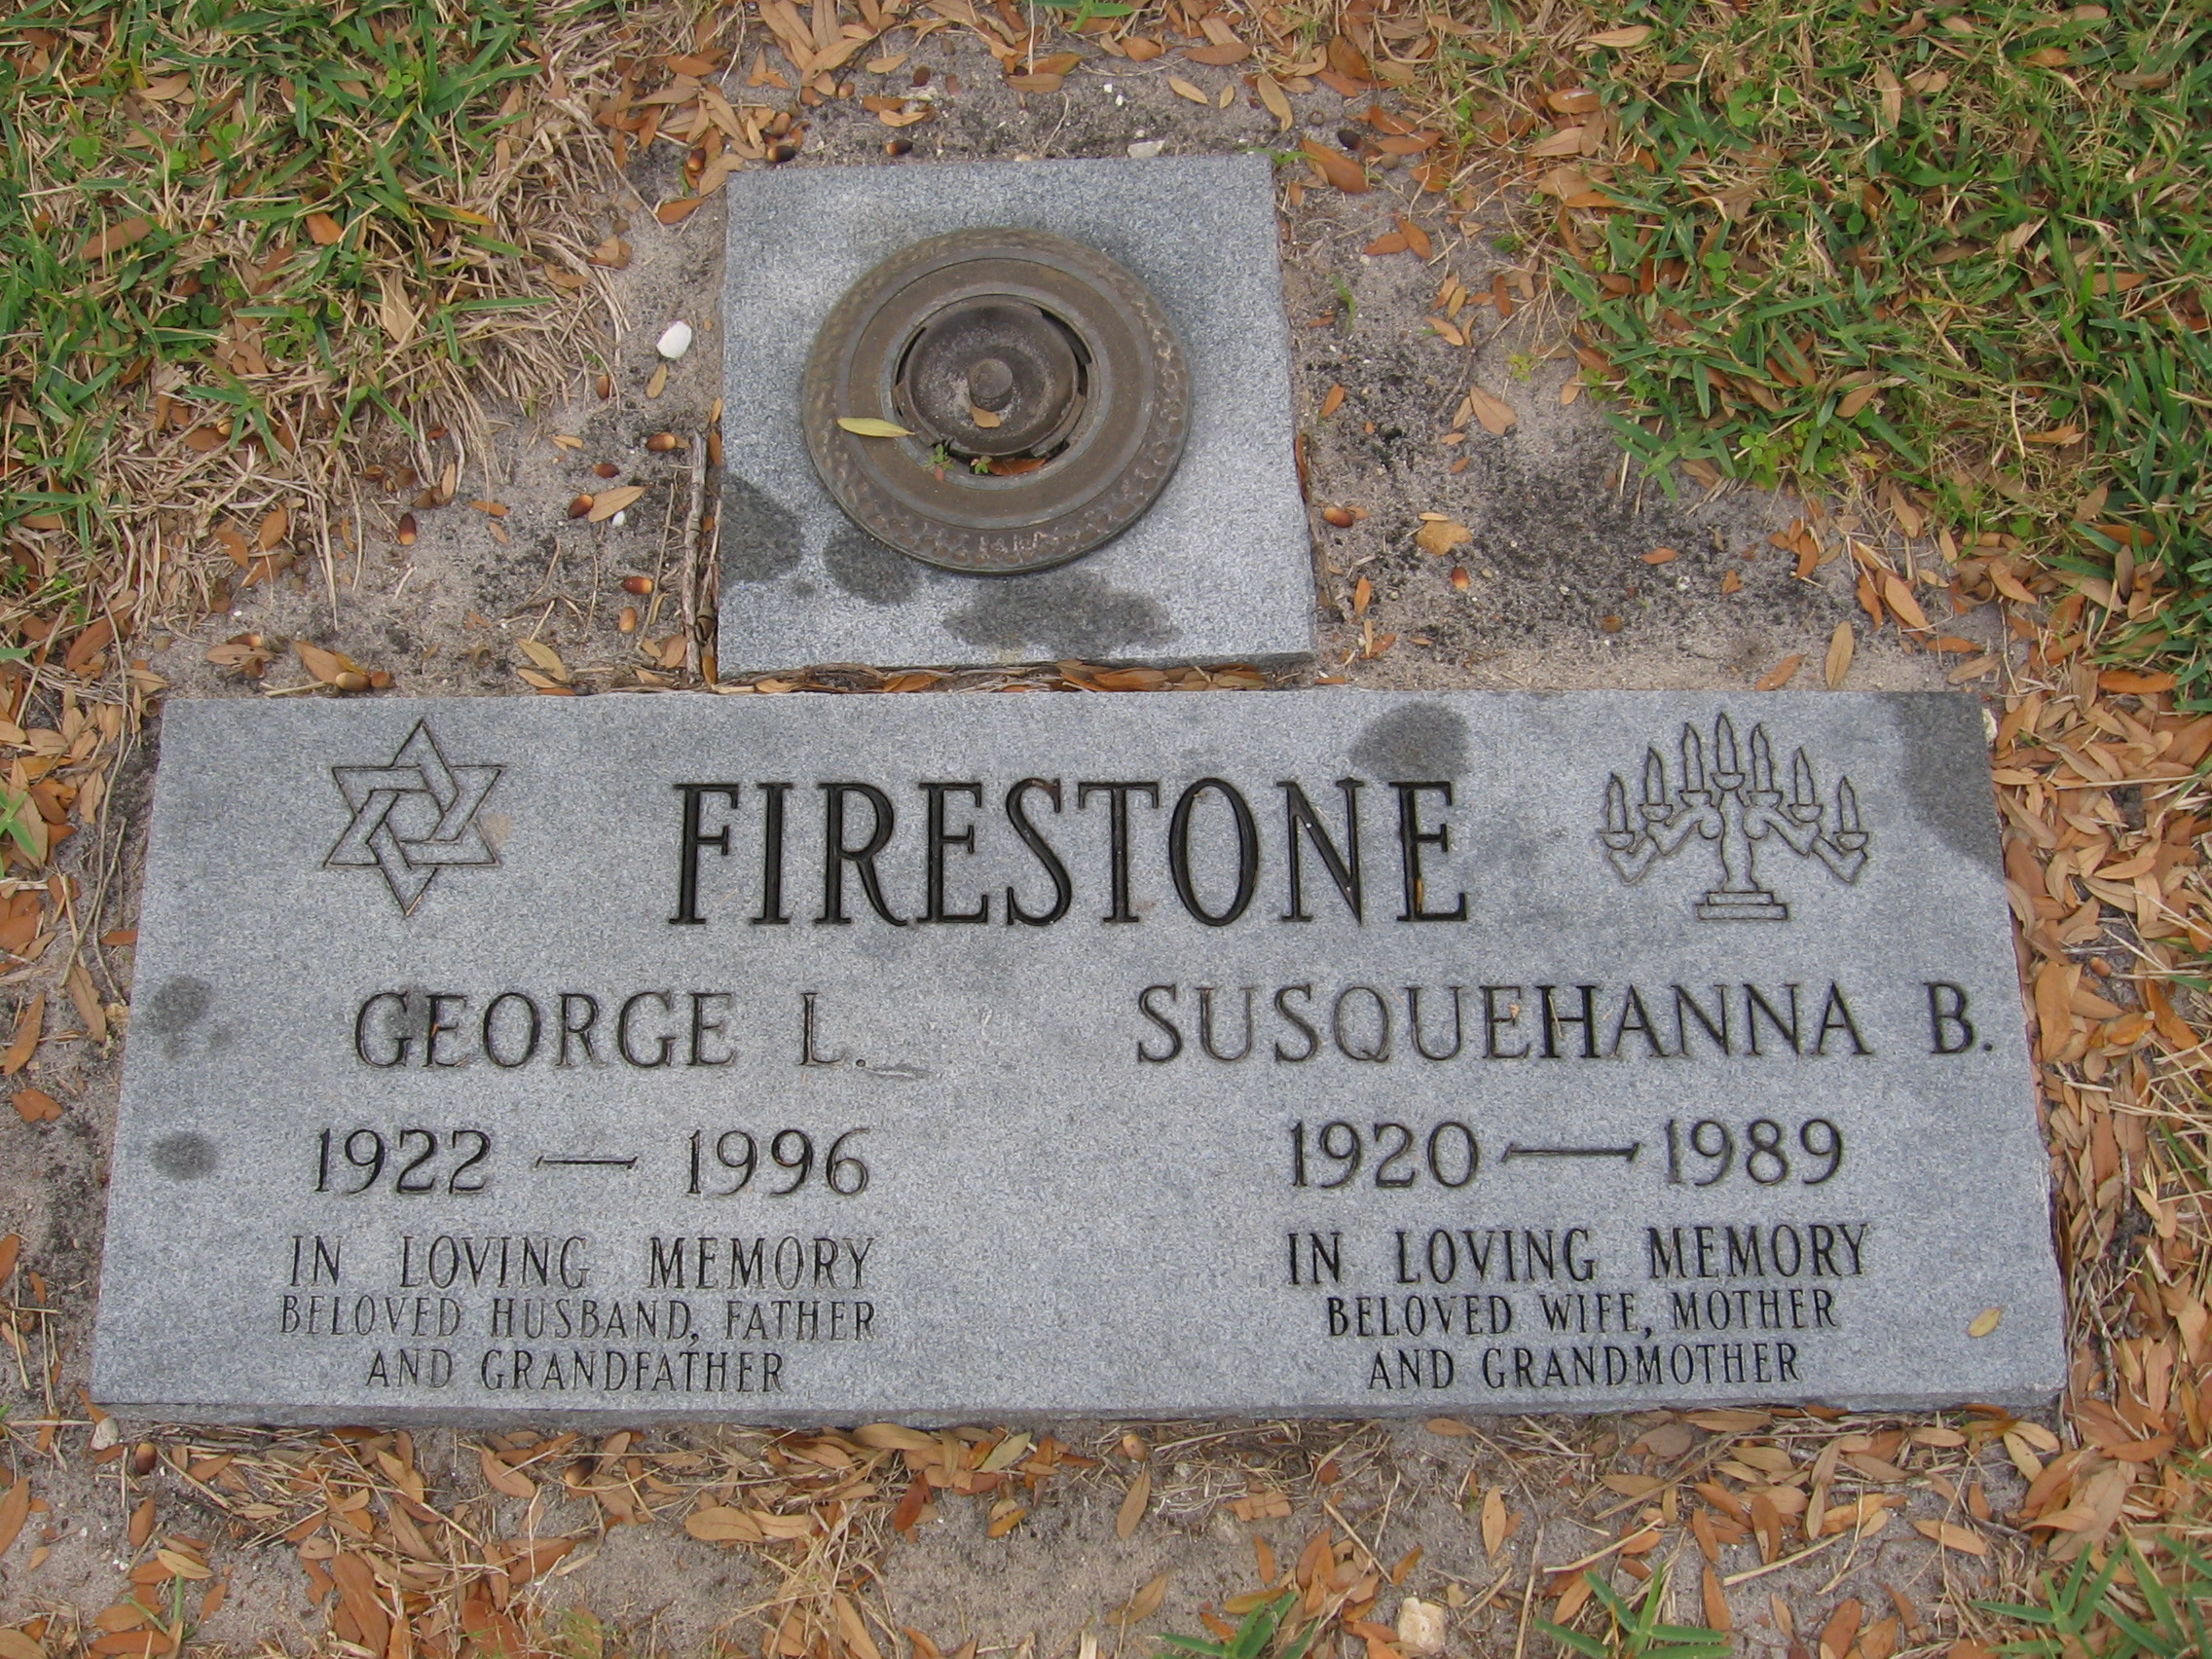 Susquehanna B Firestone